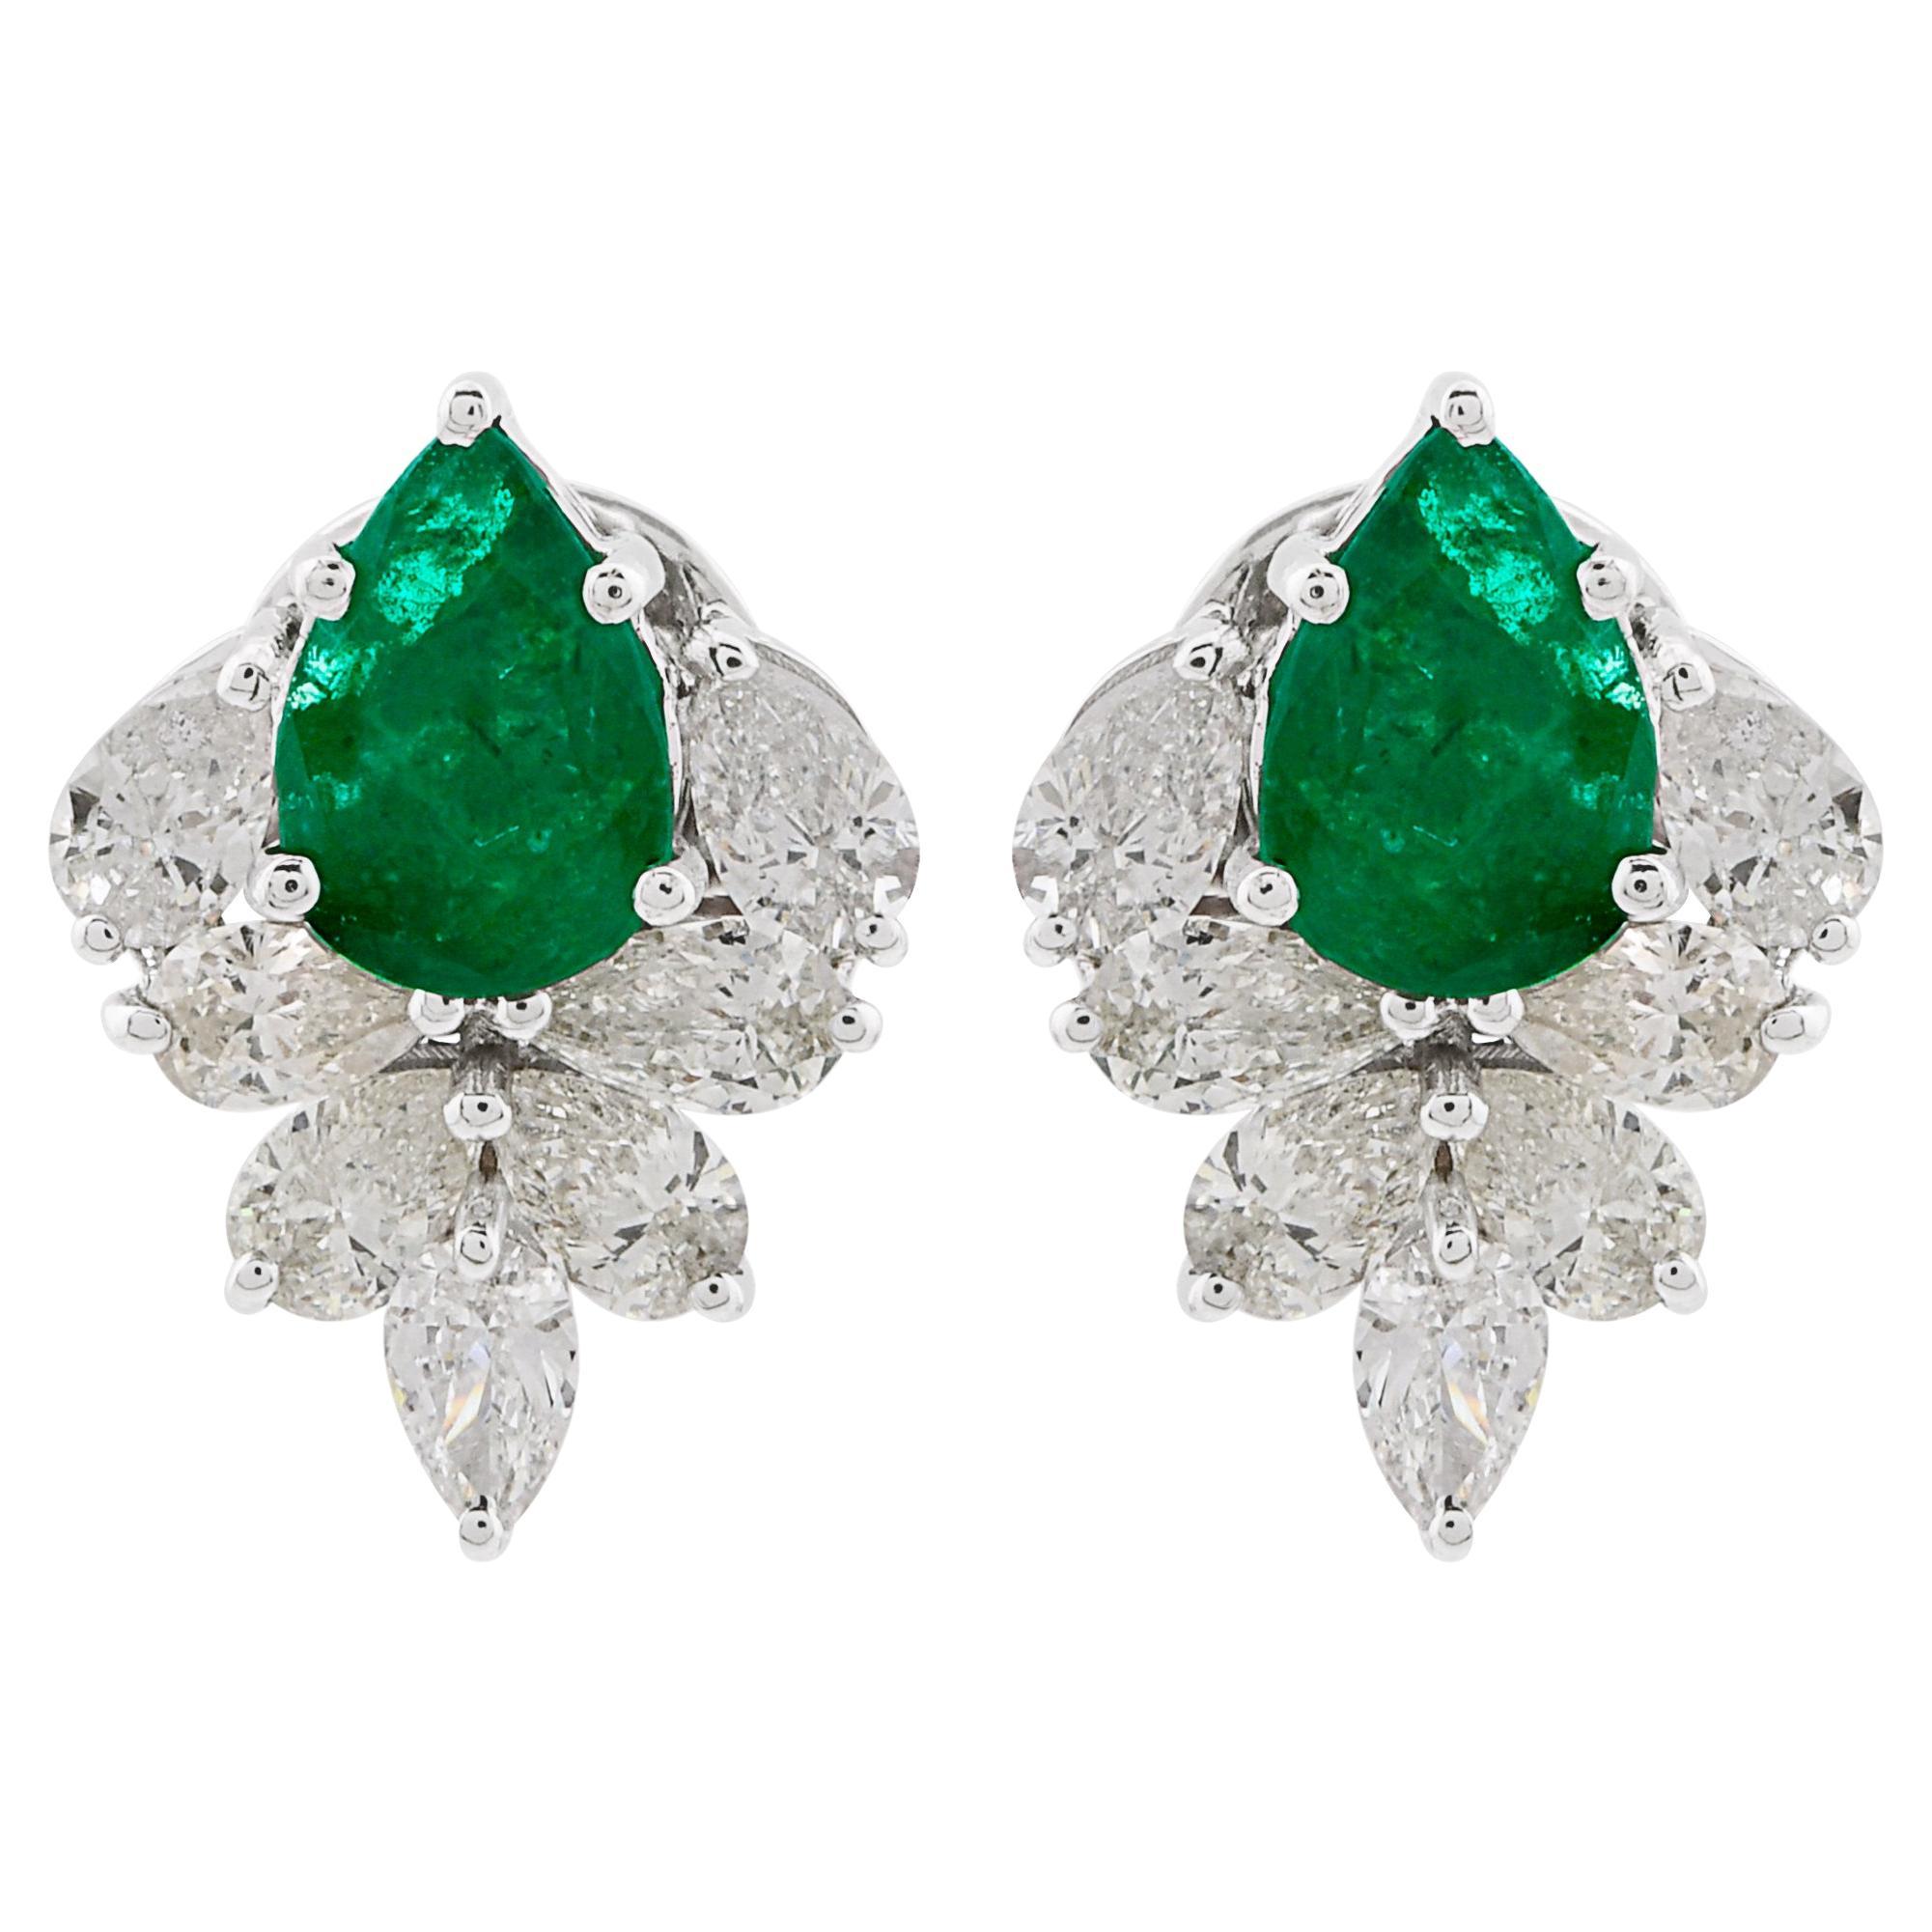 Natural Emerald Gemstone Stud Earrings Pear Diamond 18 Karat White Gold Jewelry